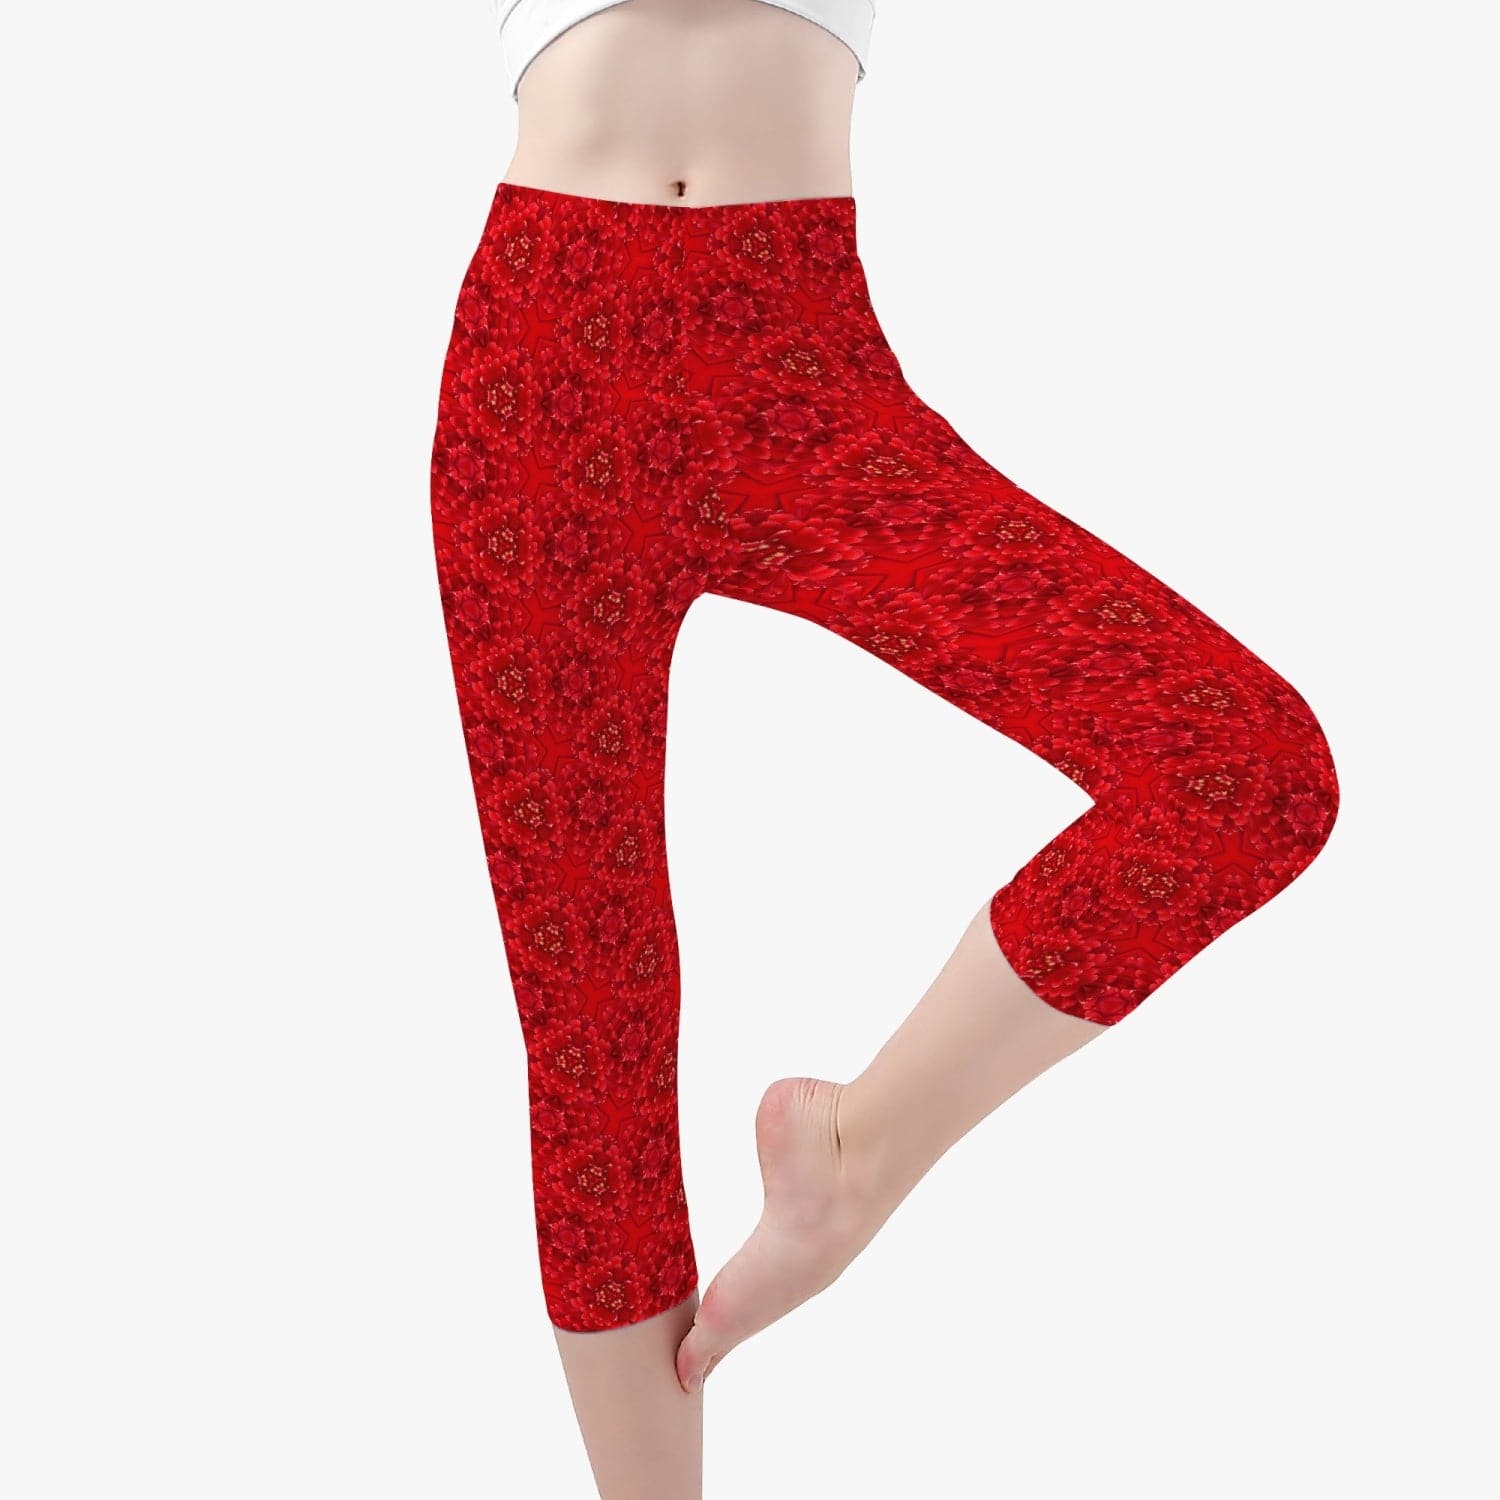 Red Root Chacra Short Type Yoga Pants, by Sensus Studio Design